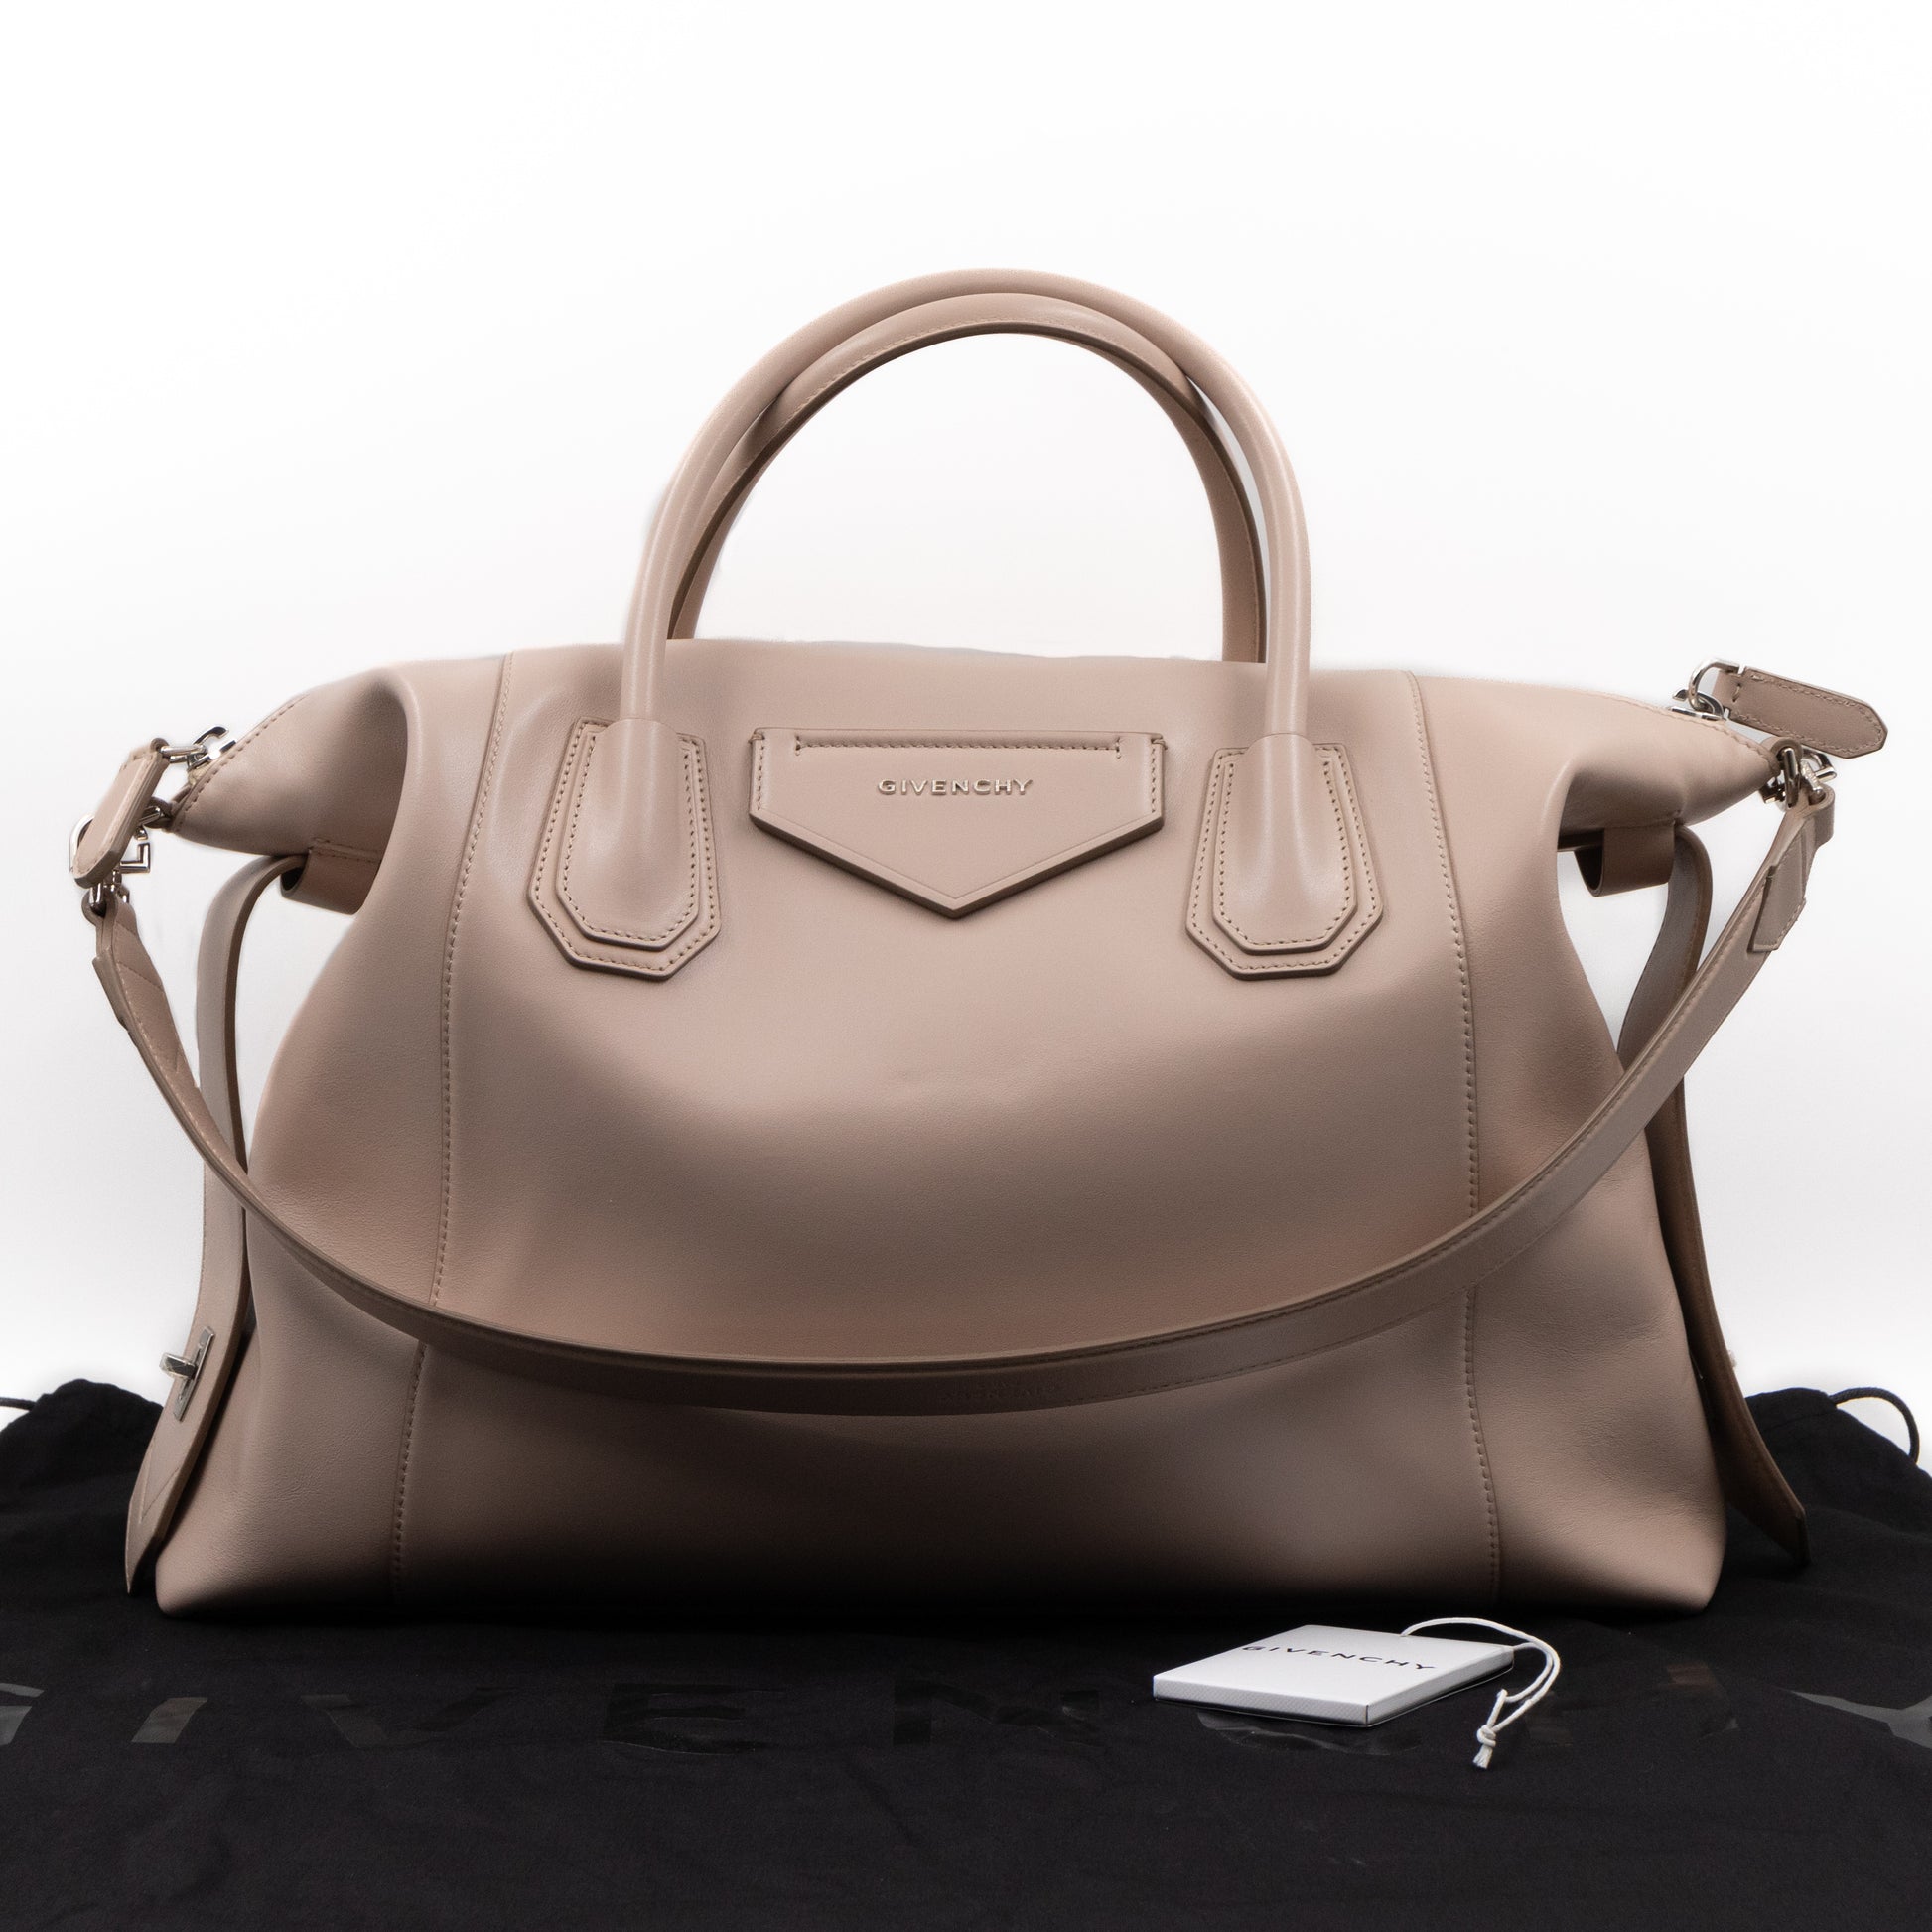 Givenchy Medium Antigona Soft Bag in Beige